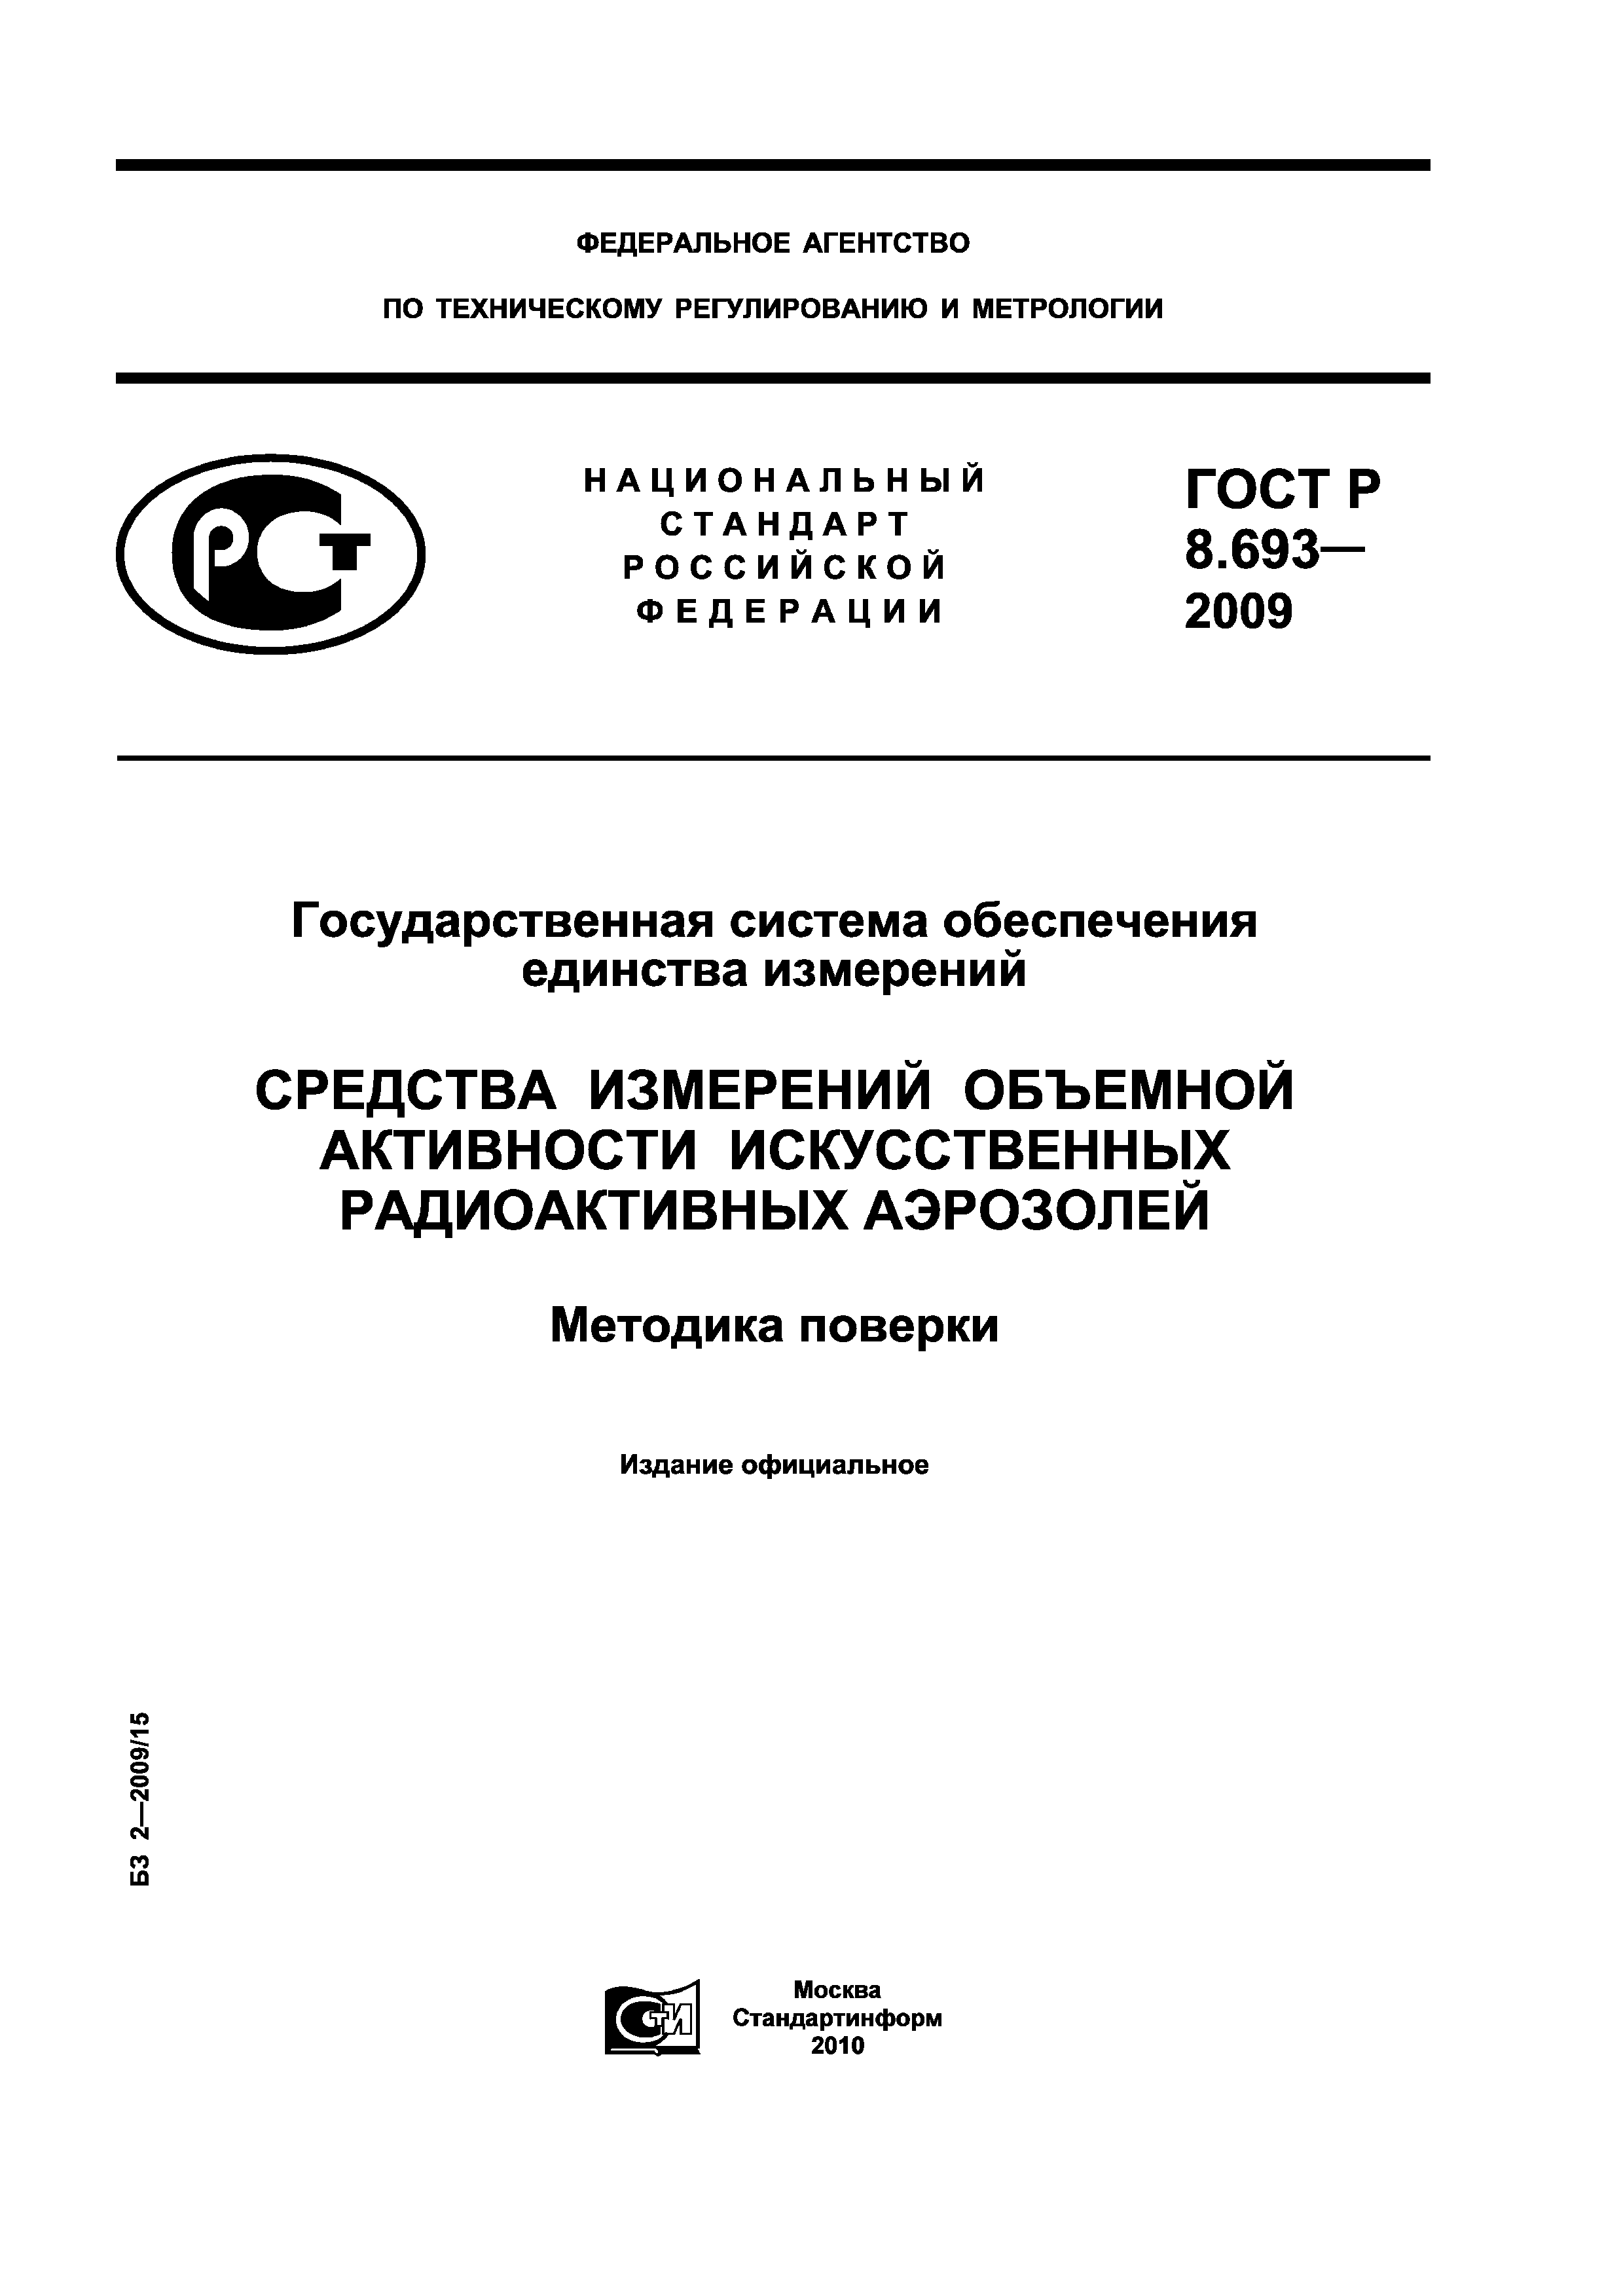 ГОСТ Р 8.693-2009